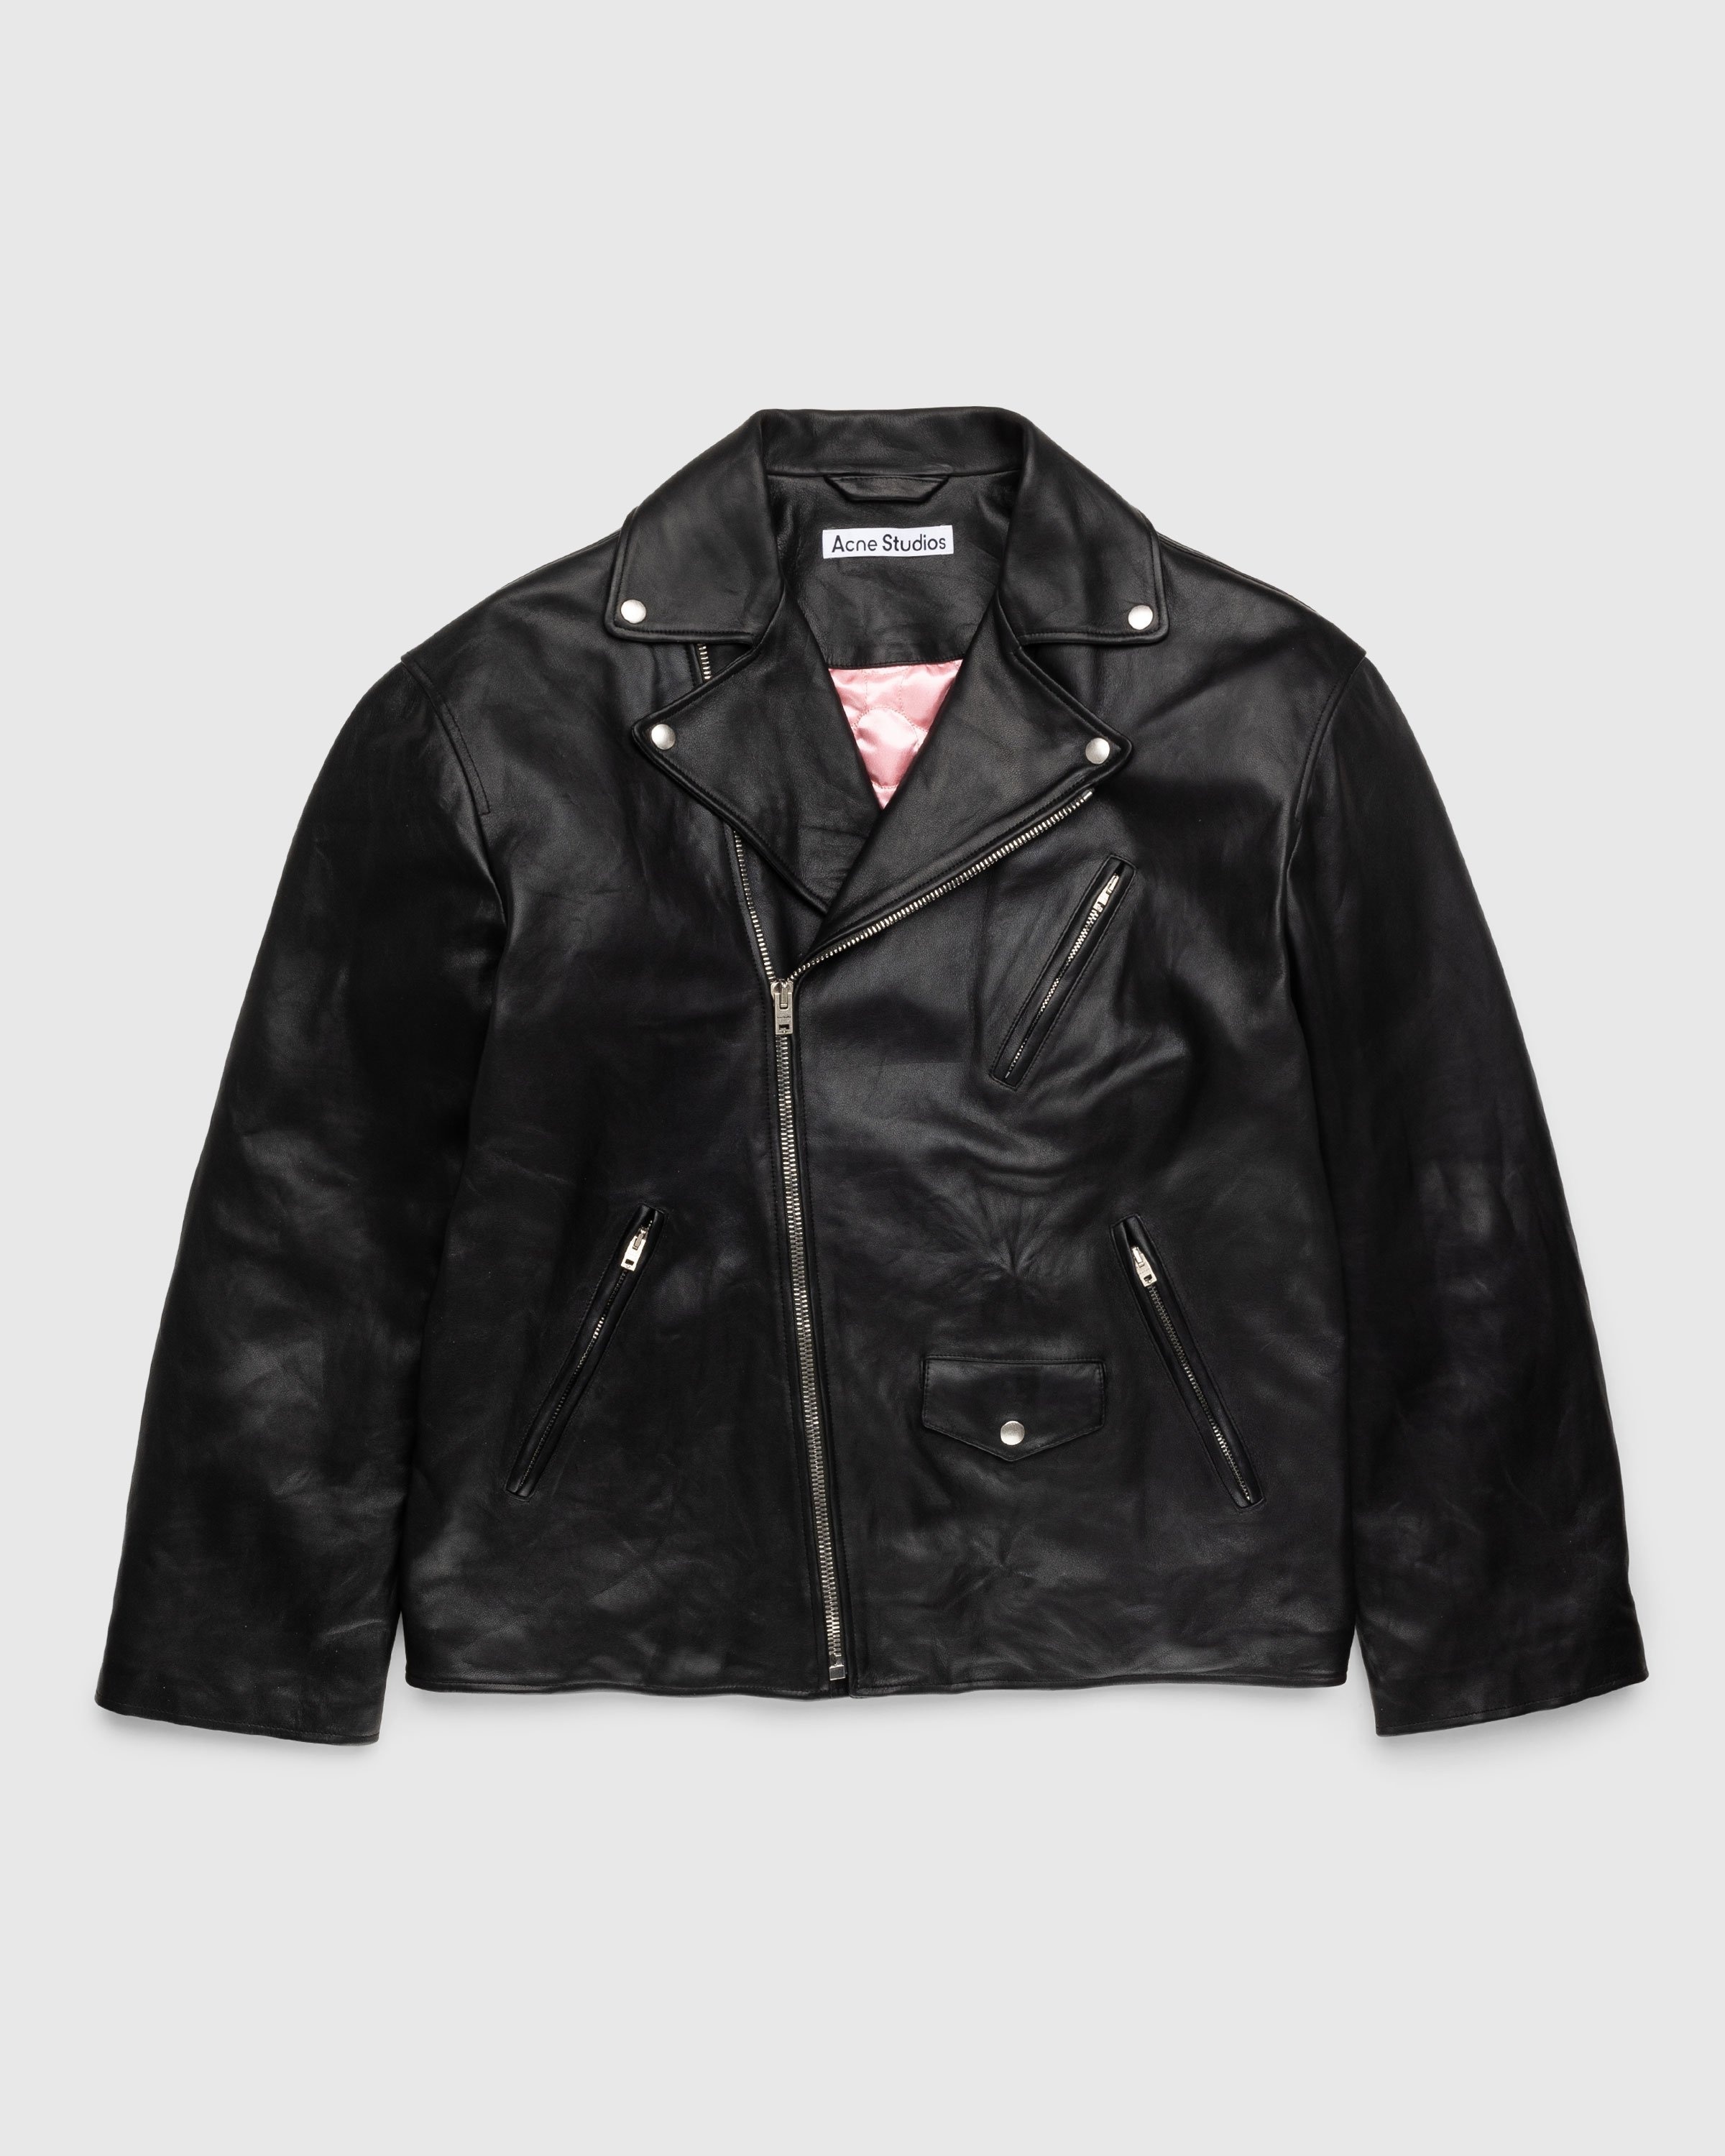 Acne Studios – Distressed Leather Jacket Black - Outerwear - Black - Image 1